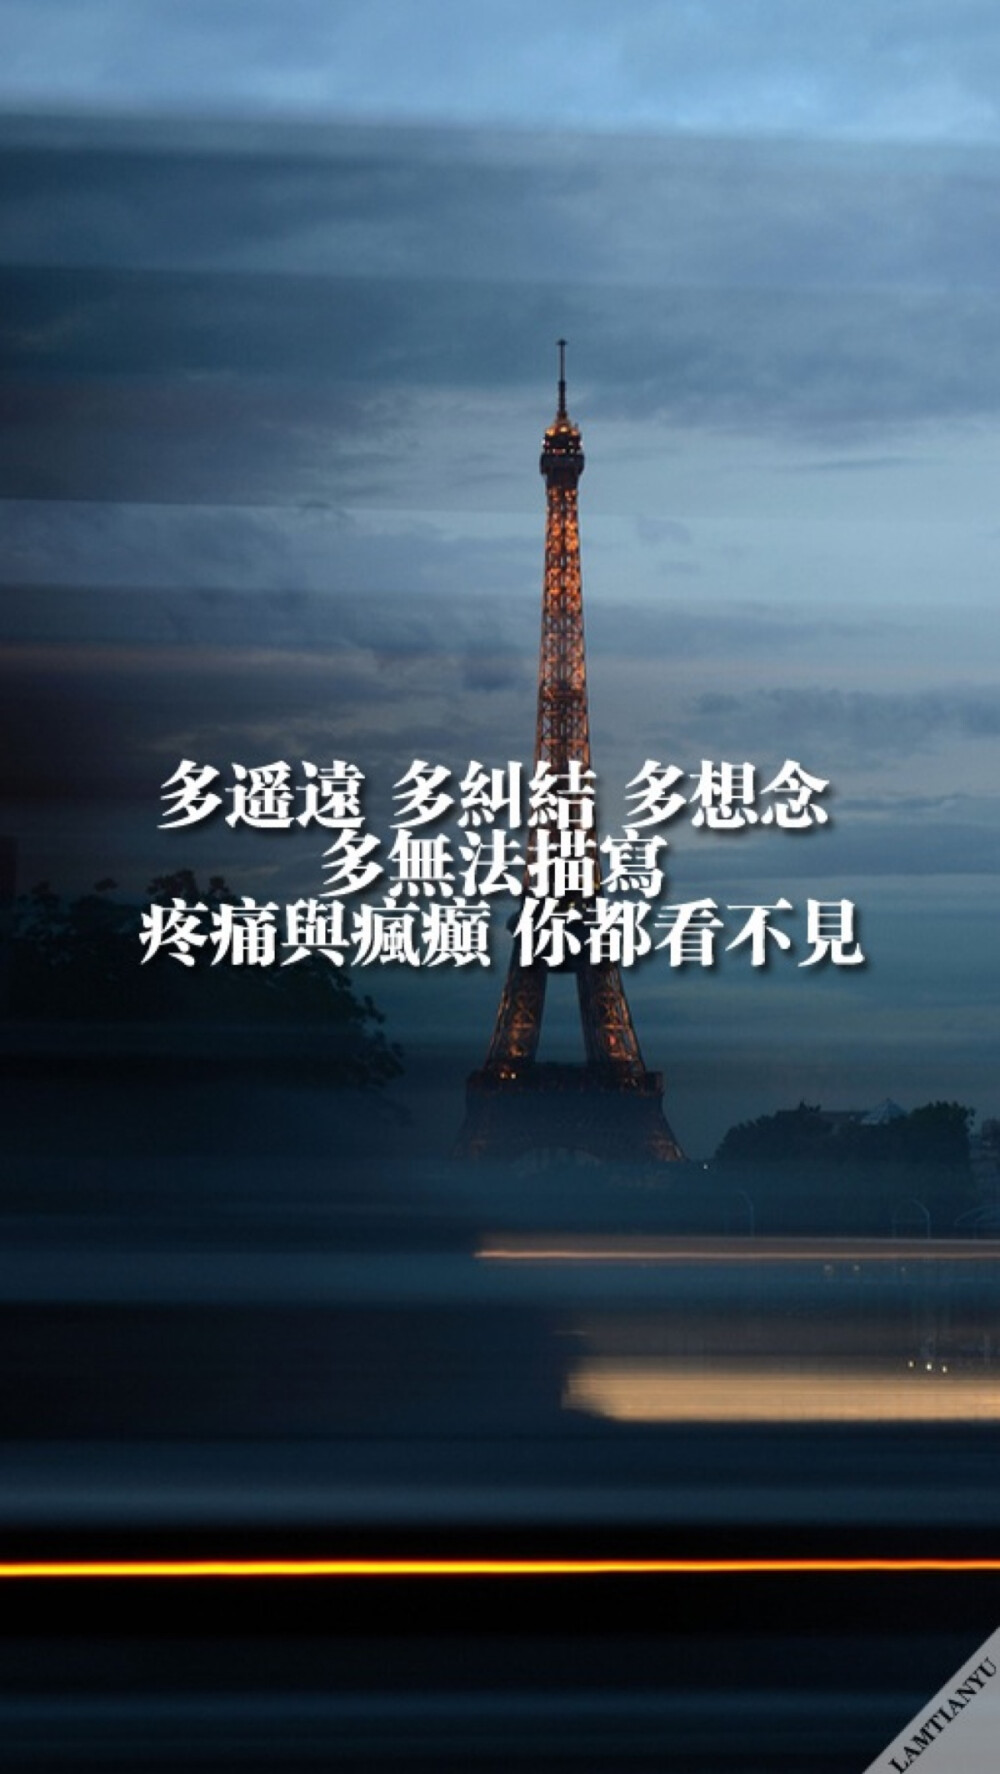 Lamtianyu 壁纸 iPhone 清新 欧美 句子 插画 复古 文字 埃菲尔铁塔